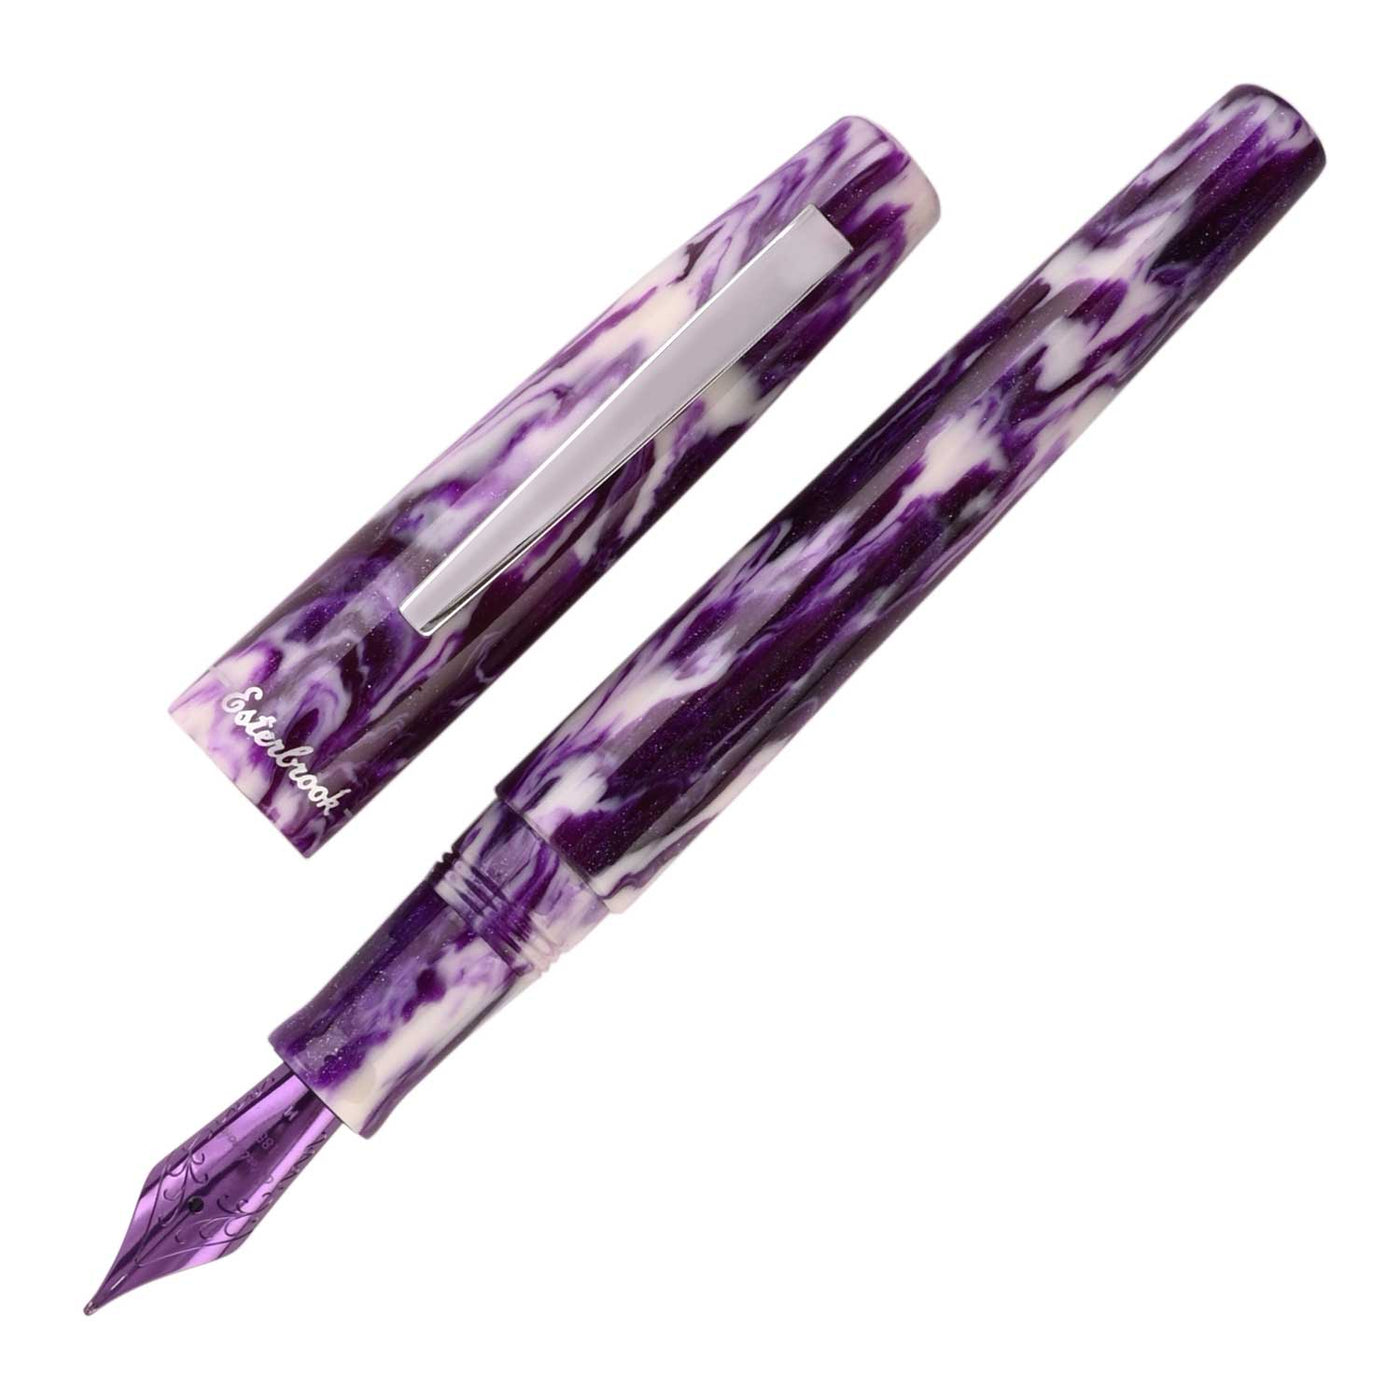 Esterbrook Camden Northern Lights Fountain Pen - Purple Alaska PVD (Limited Edition) 1